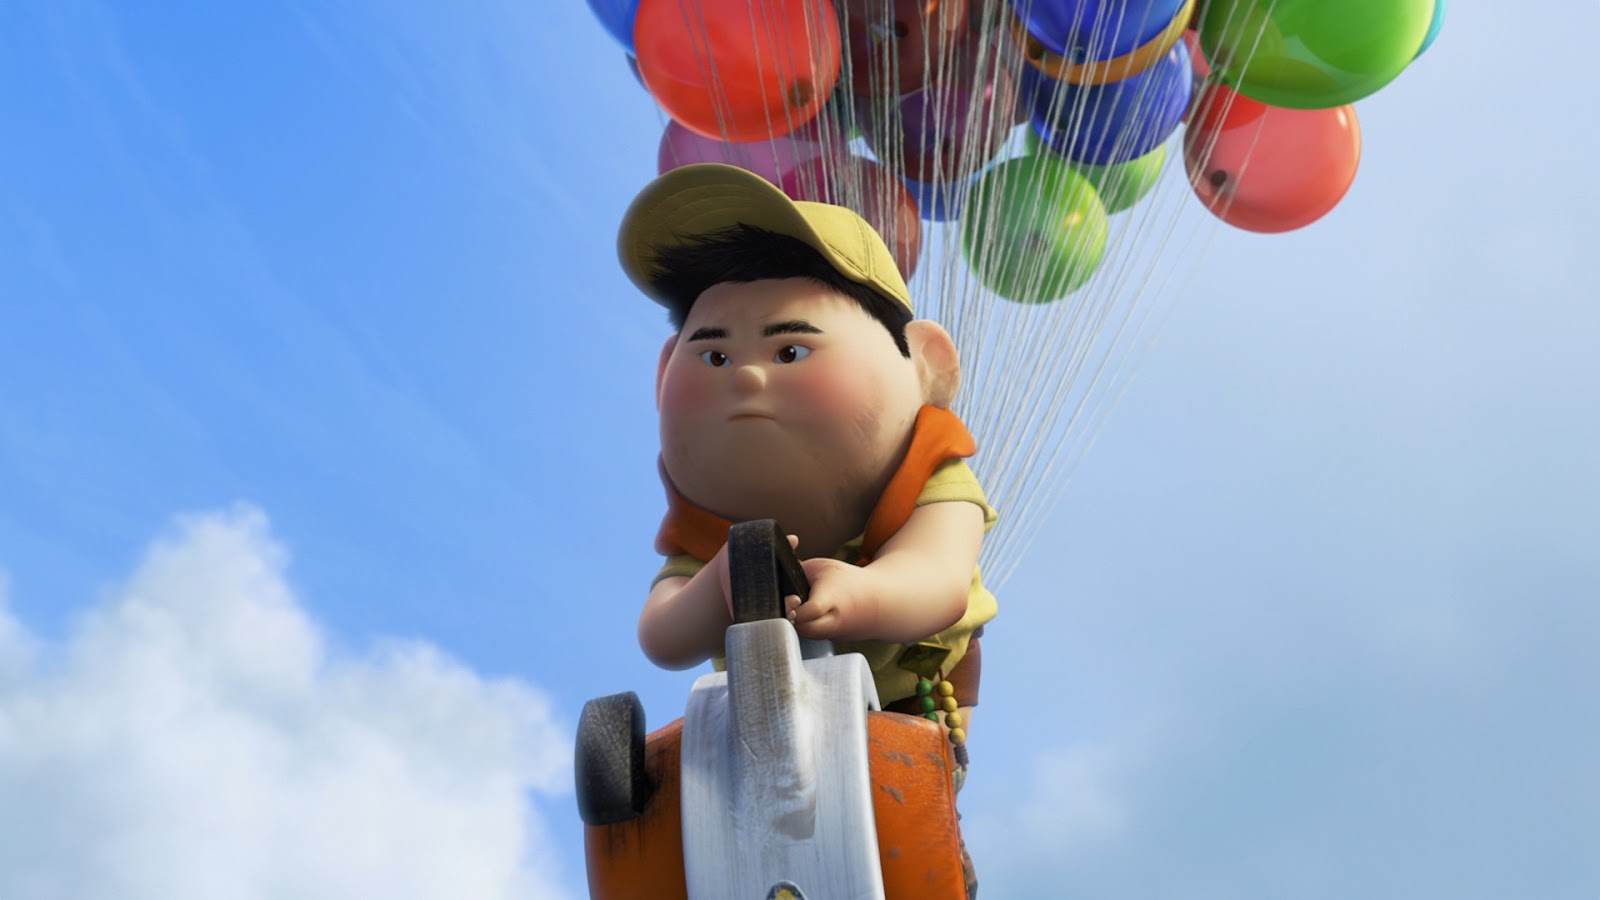 disney pixar wallpaper,ballon,partyversorgung,himmel,kind,spaß